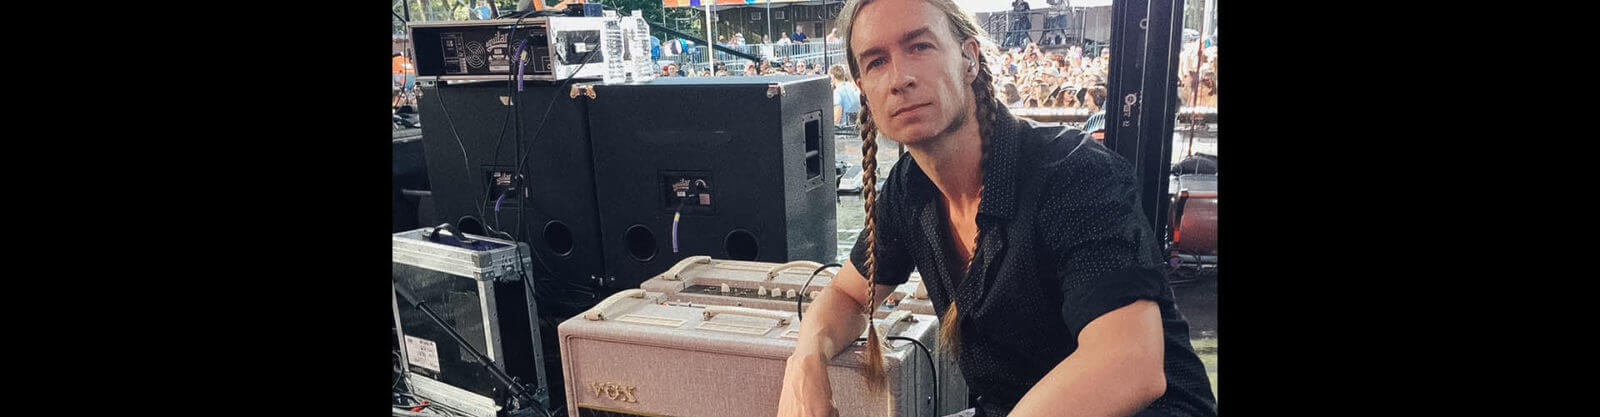 man backstage at concert leaning on VOX amplifier